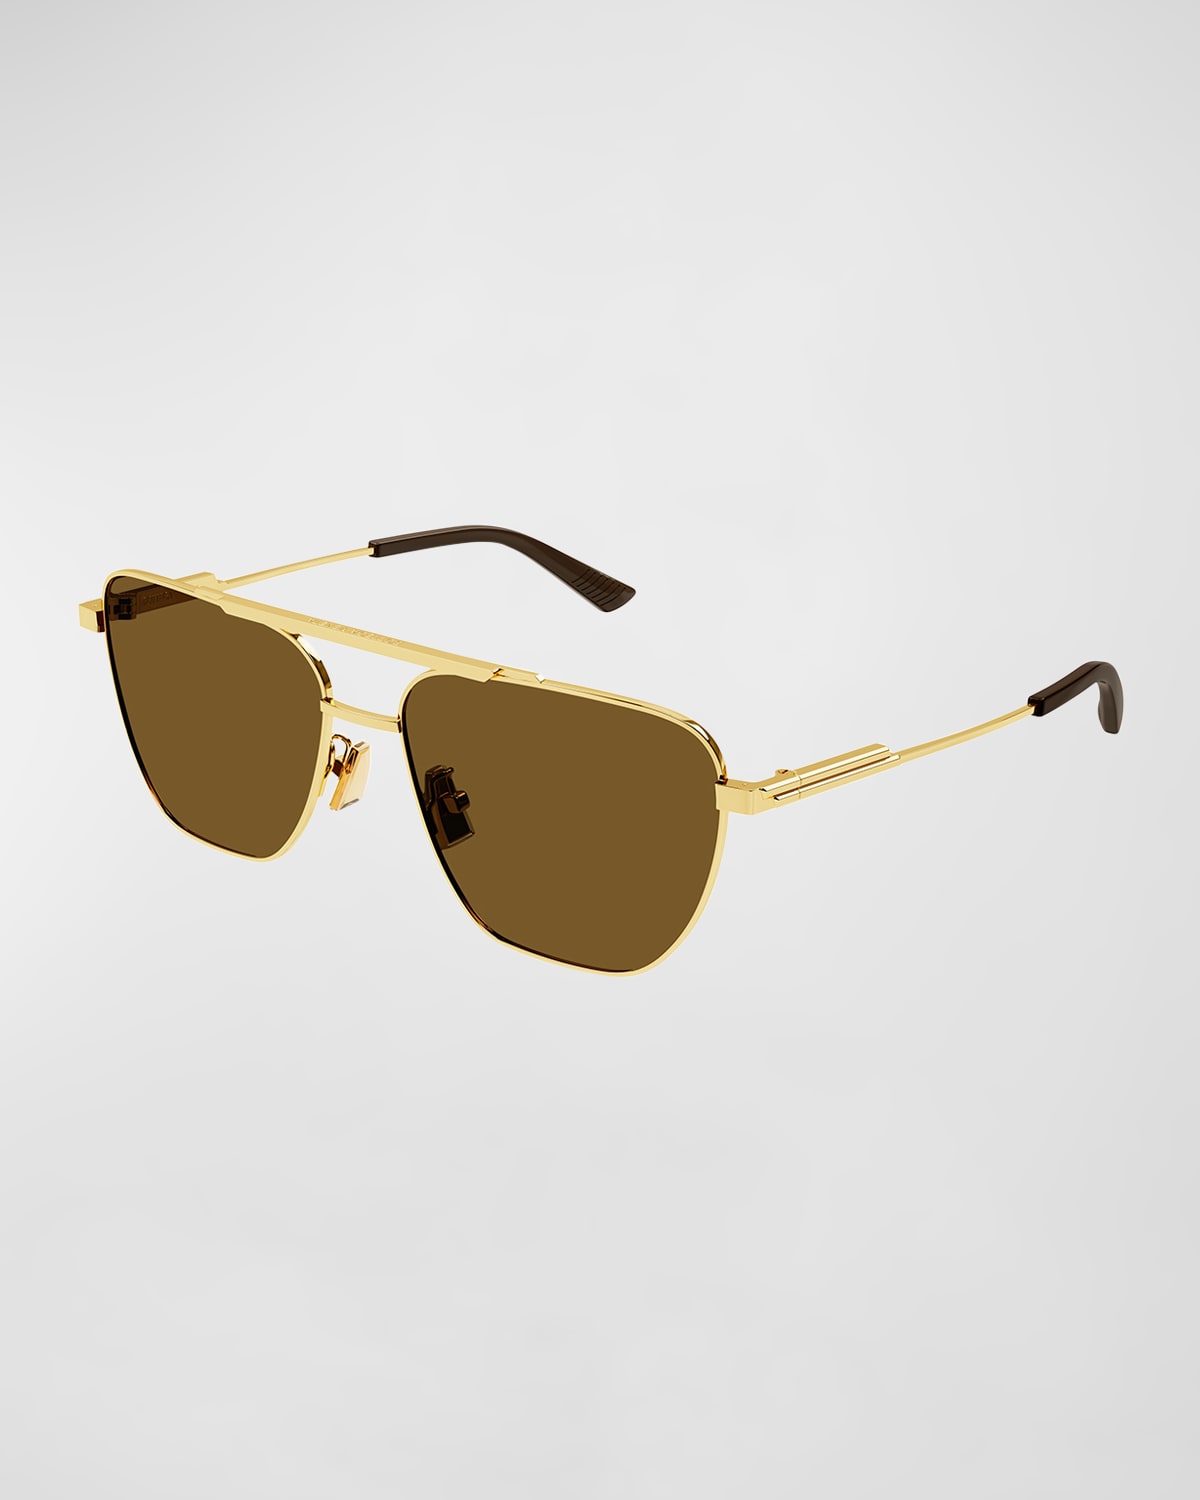 Louis Vuitton LV First Squared Pilot Sunglasses Gold Metal. Size U